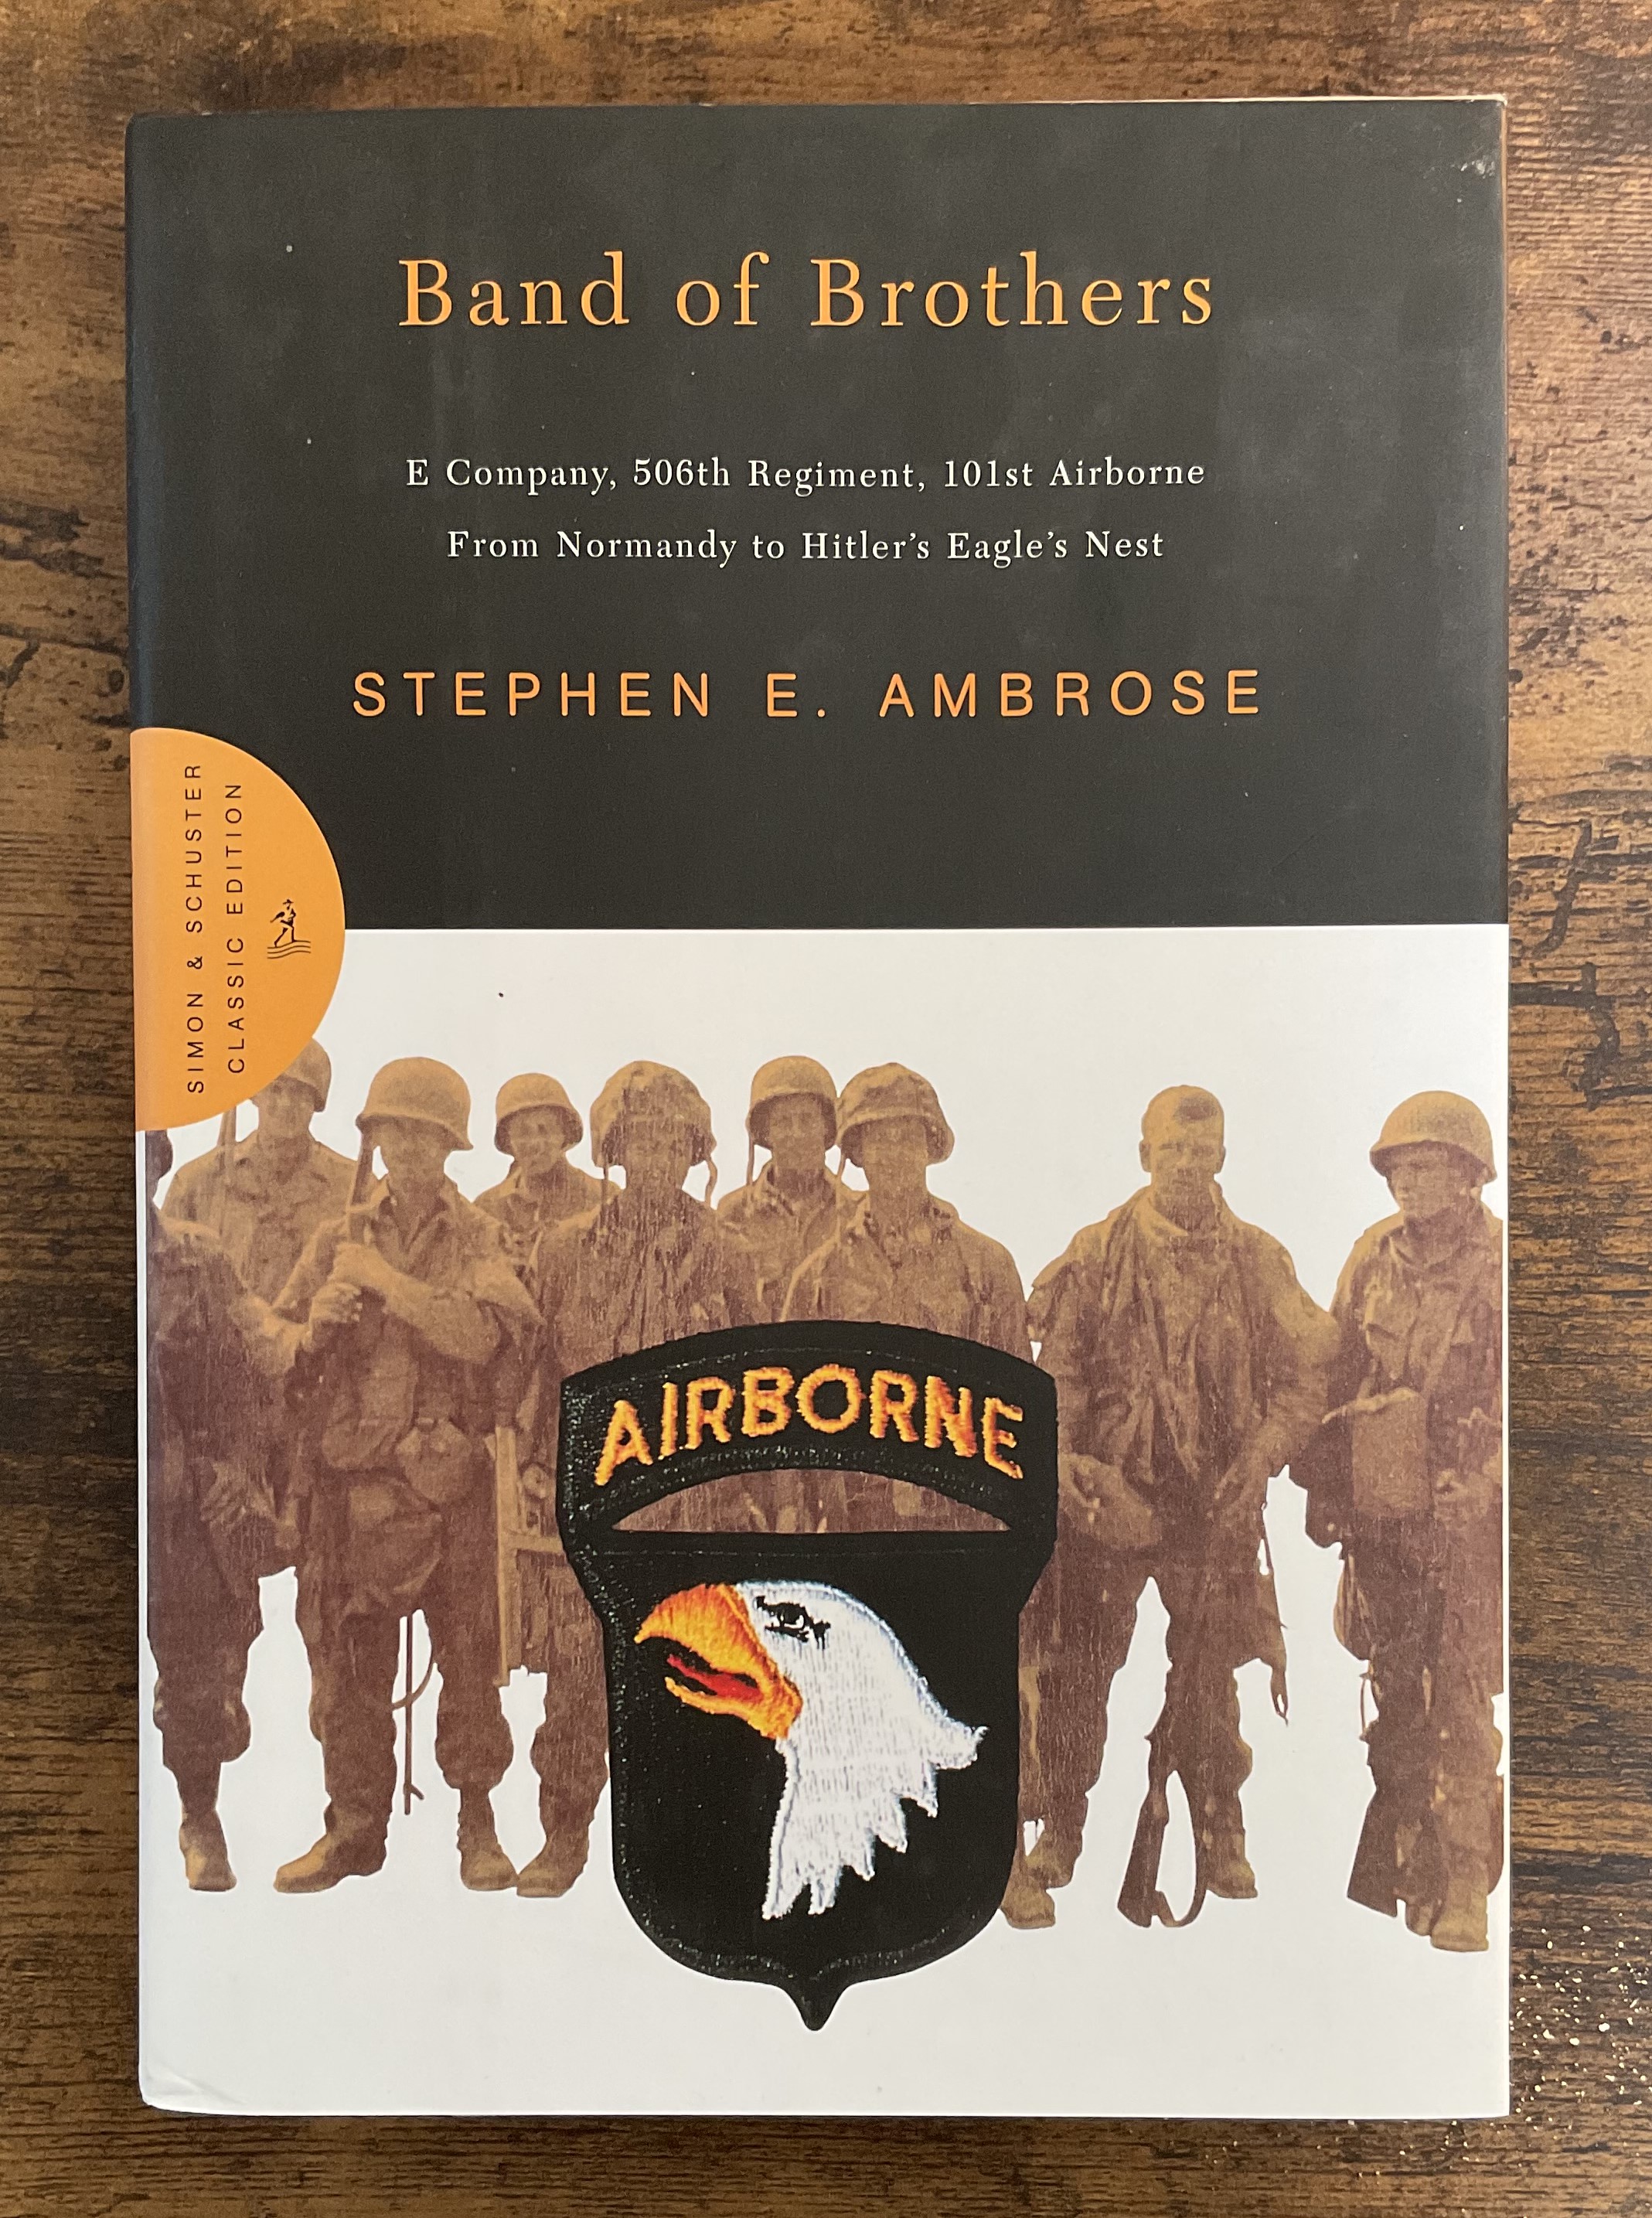 Stephen E Ambrose Hardback Book Titled Band of Brothers - E Company, 506th Regiment, 101st